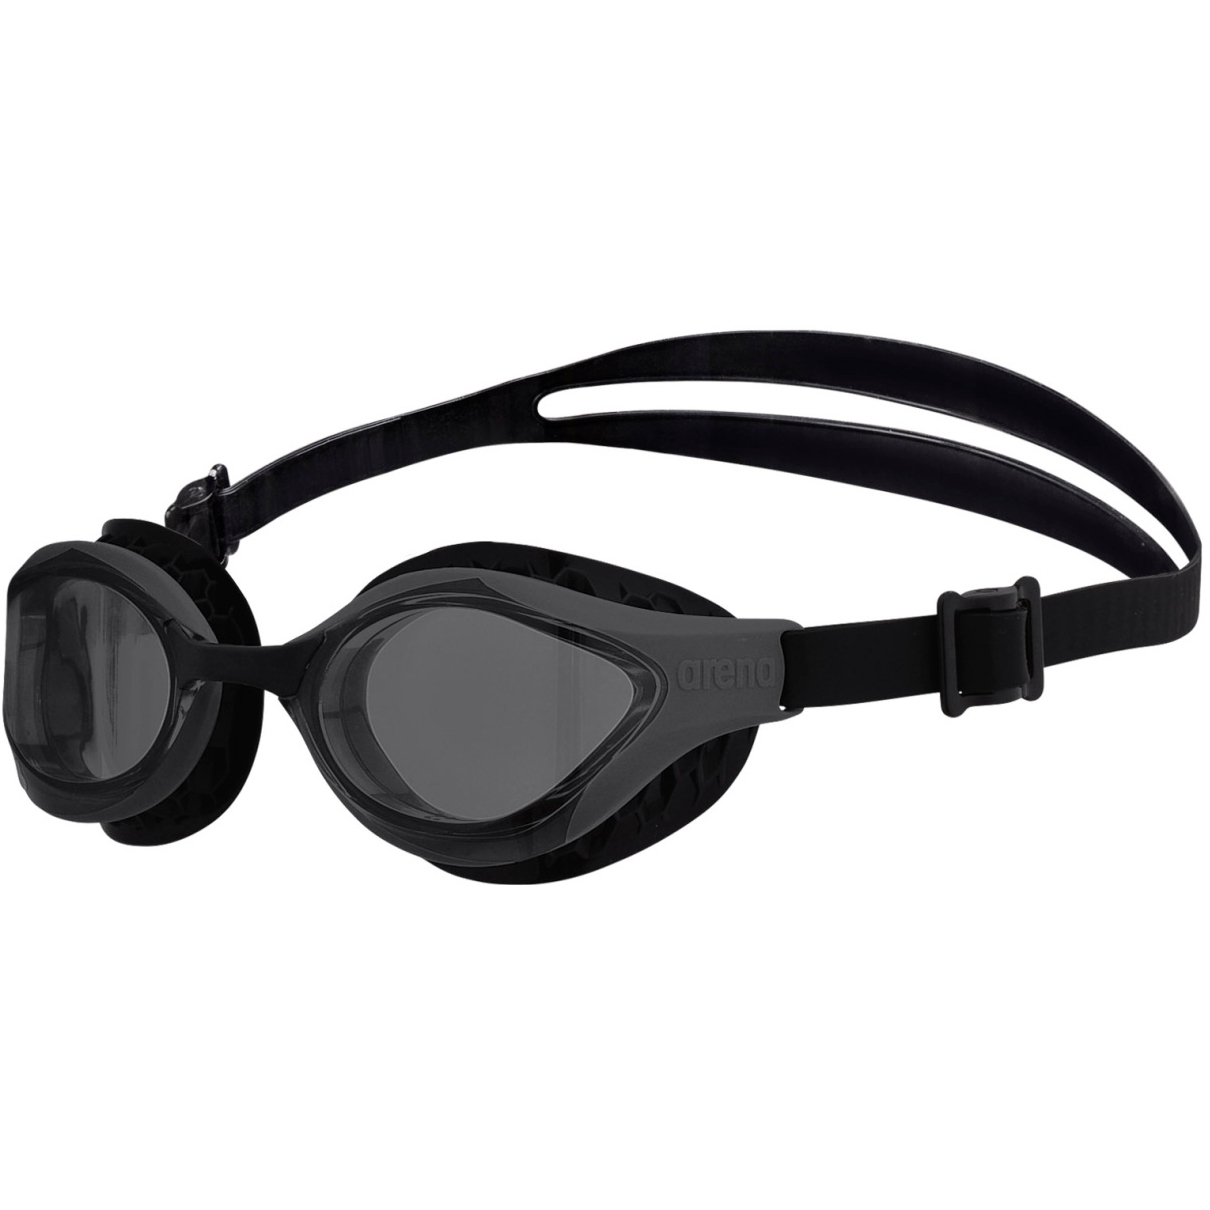 Picture of arena Air-Bold Swipe Swimming Goggles - Smoke - Smoke/Black